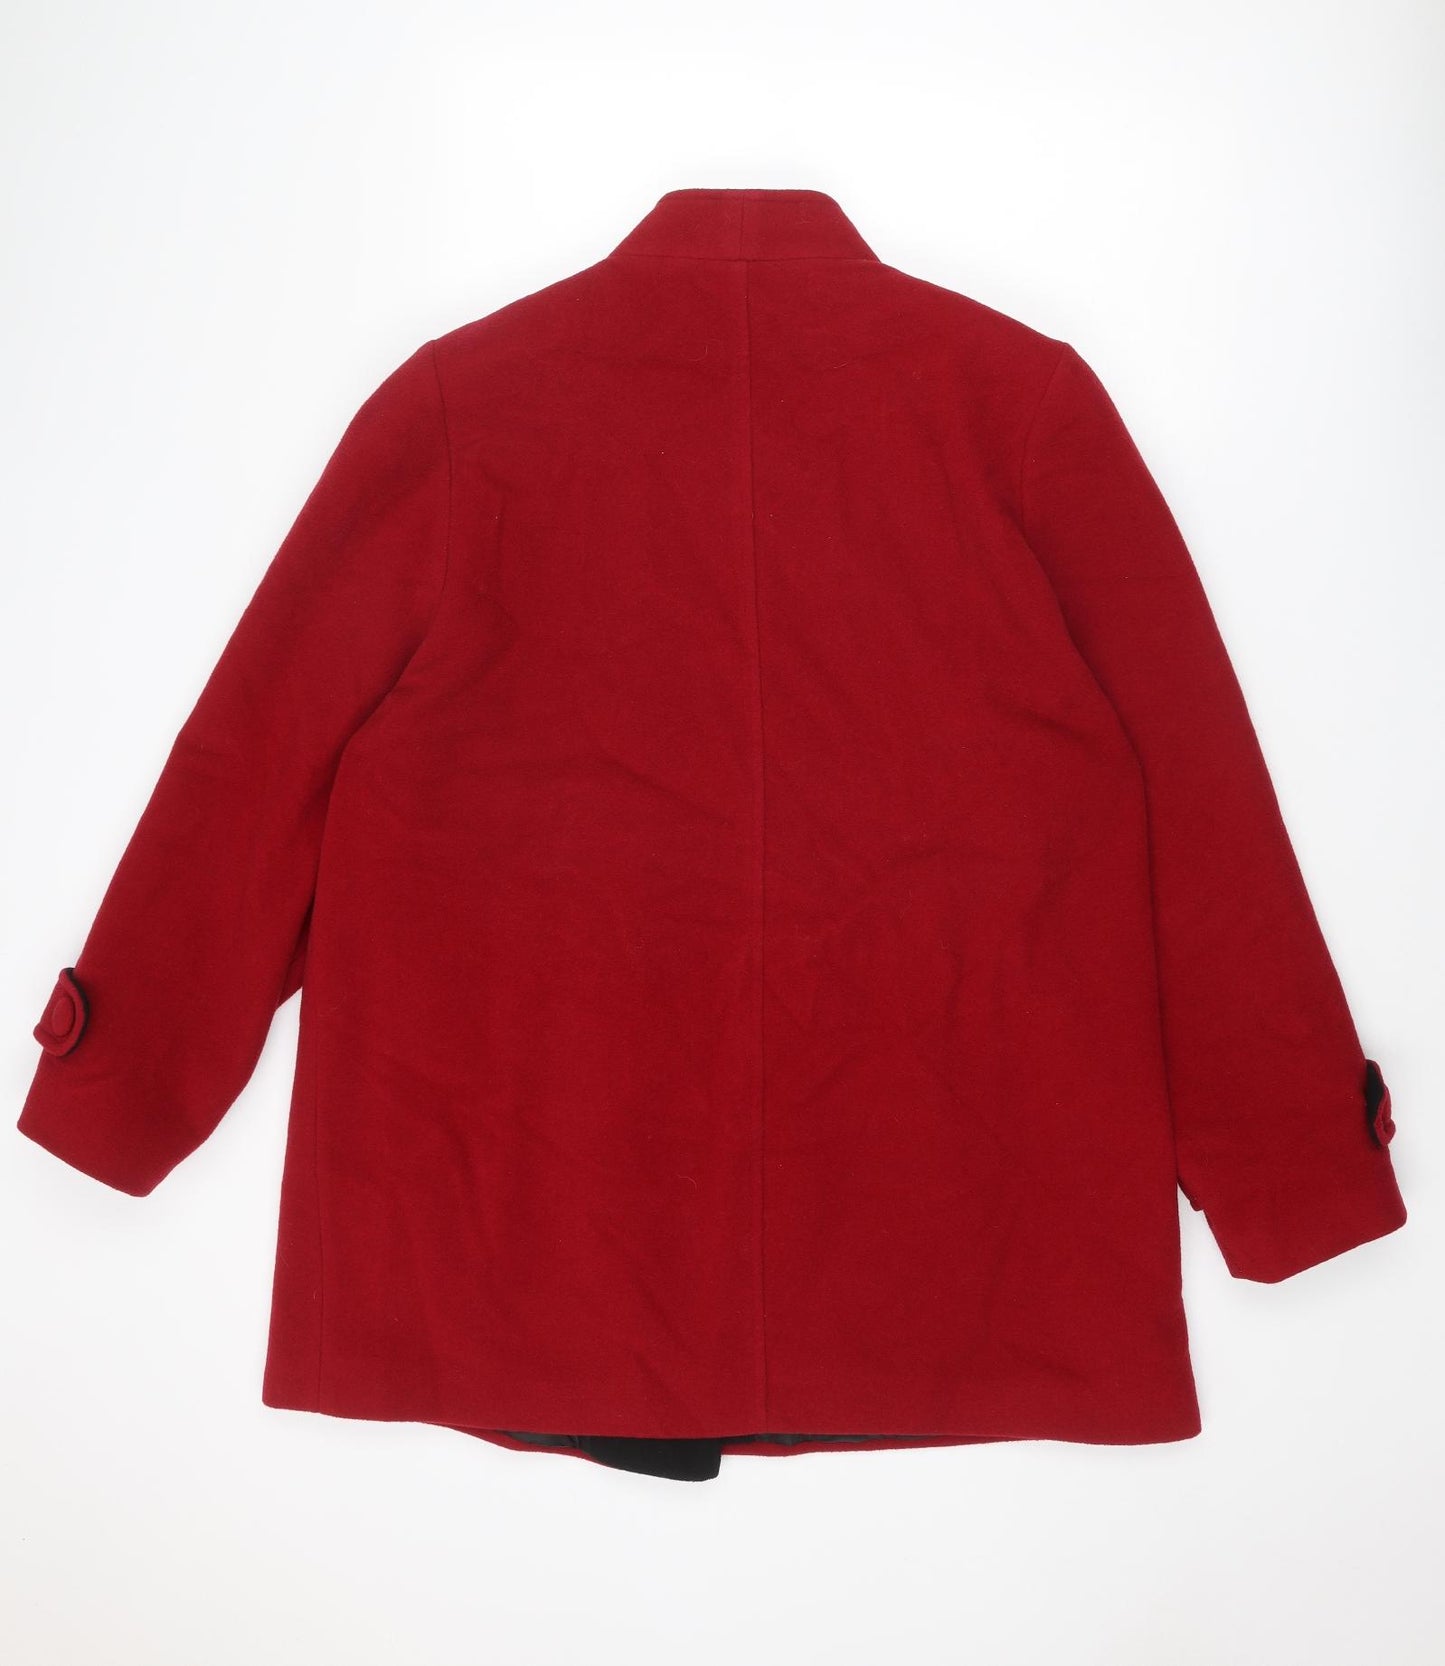 EWM Womens Red Pea Coat Coat Size 18 Button